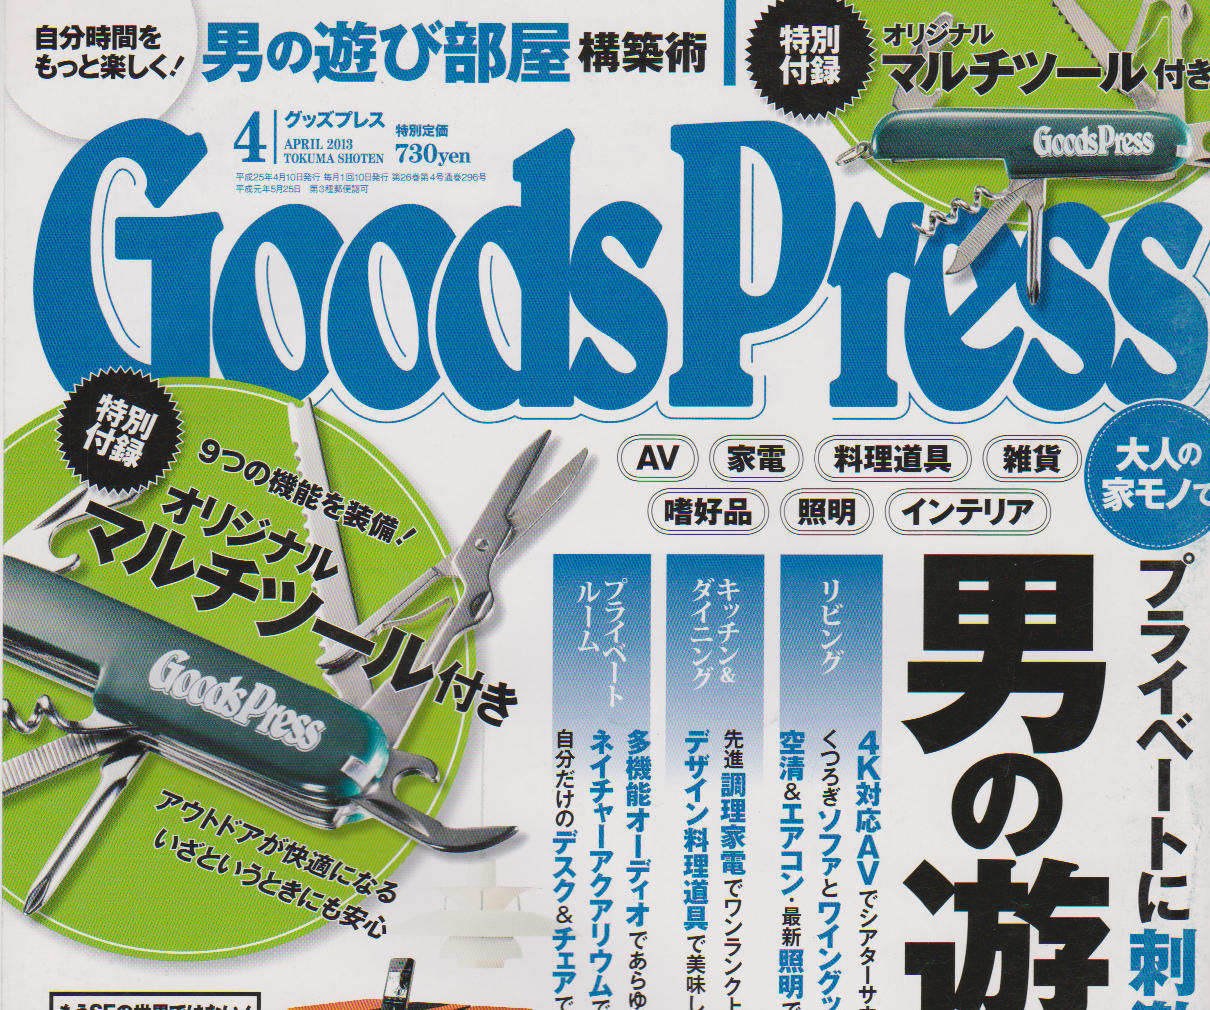 http://alrt.tokyo/news/goodspress2013_03_cover.jpg